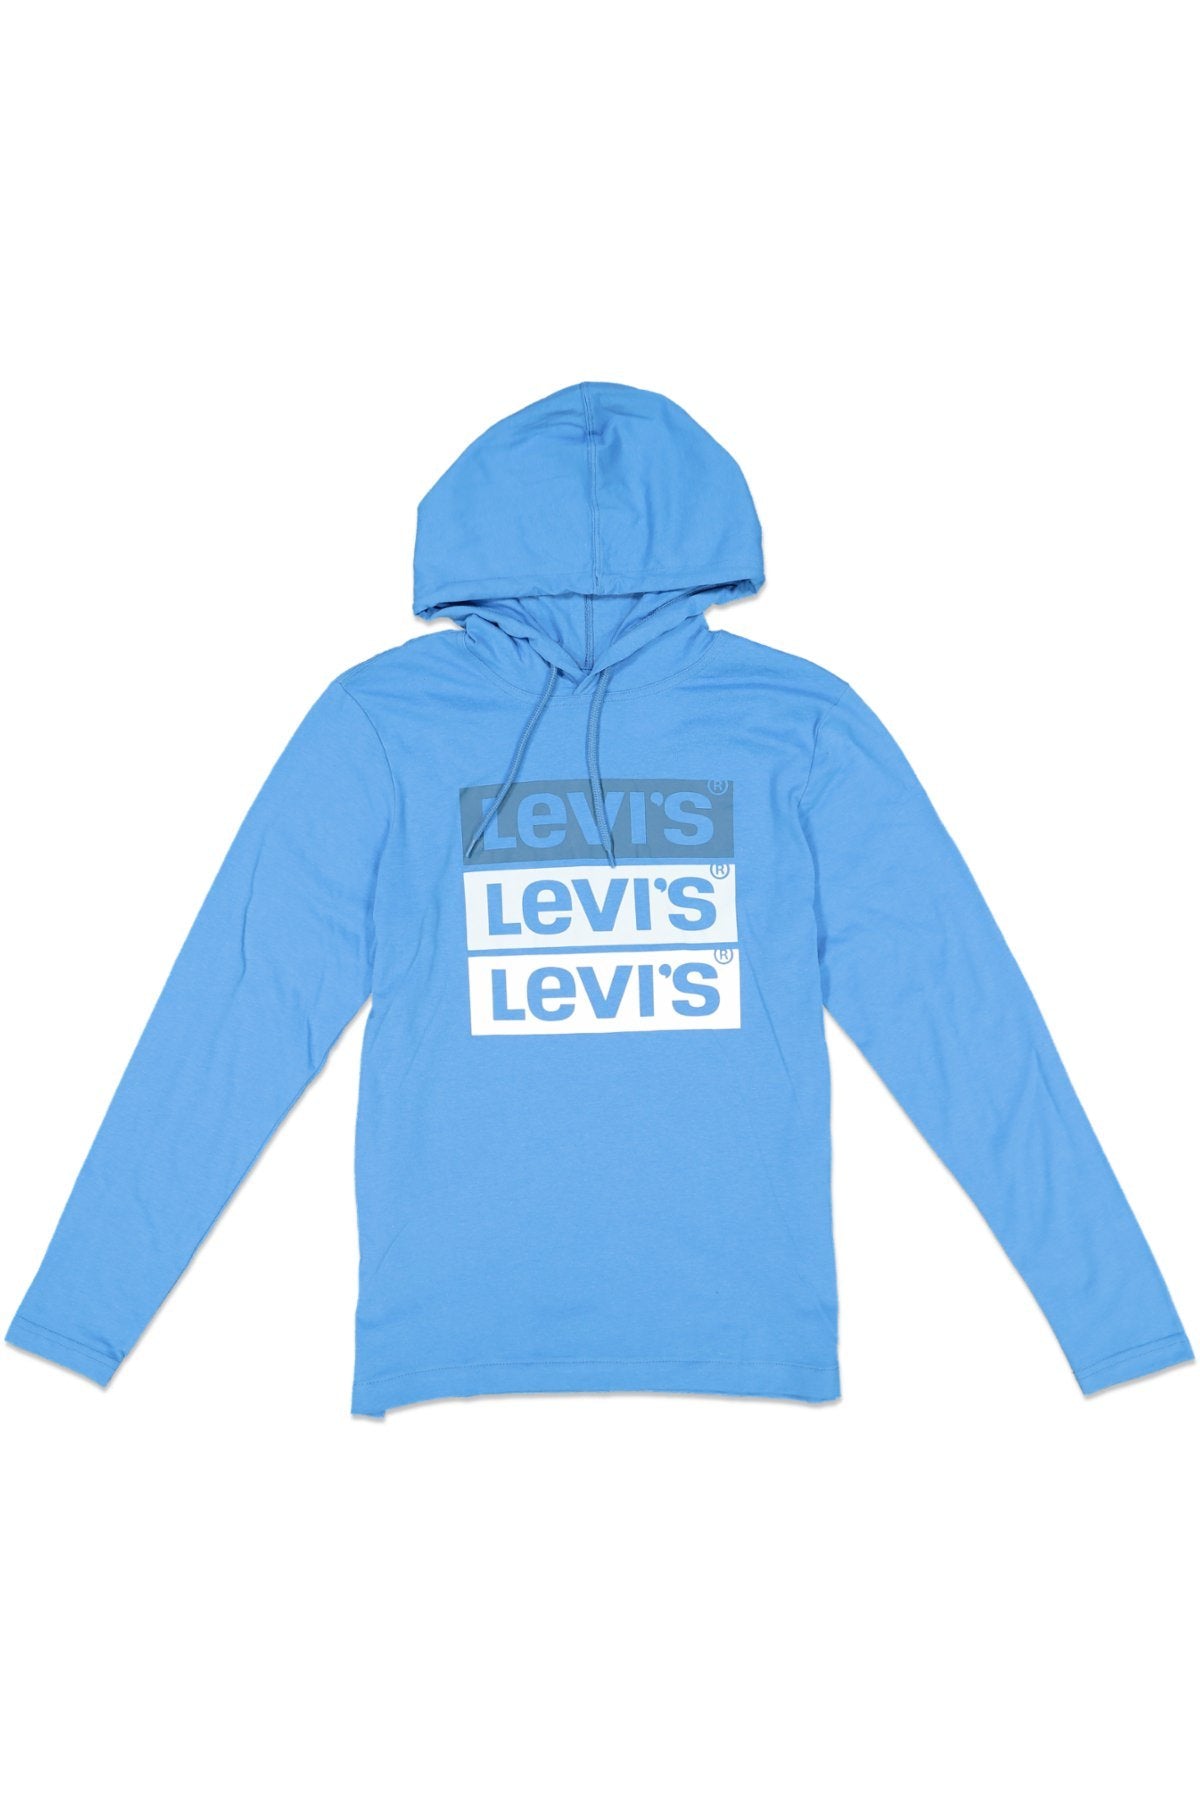 Levi's Evans Logo Graphic Hoodie CAMPANULA